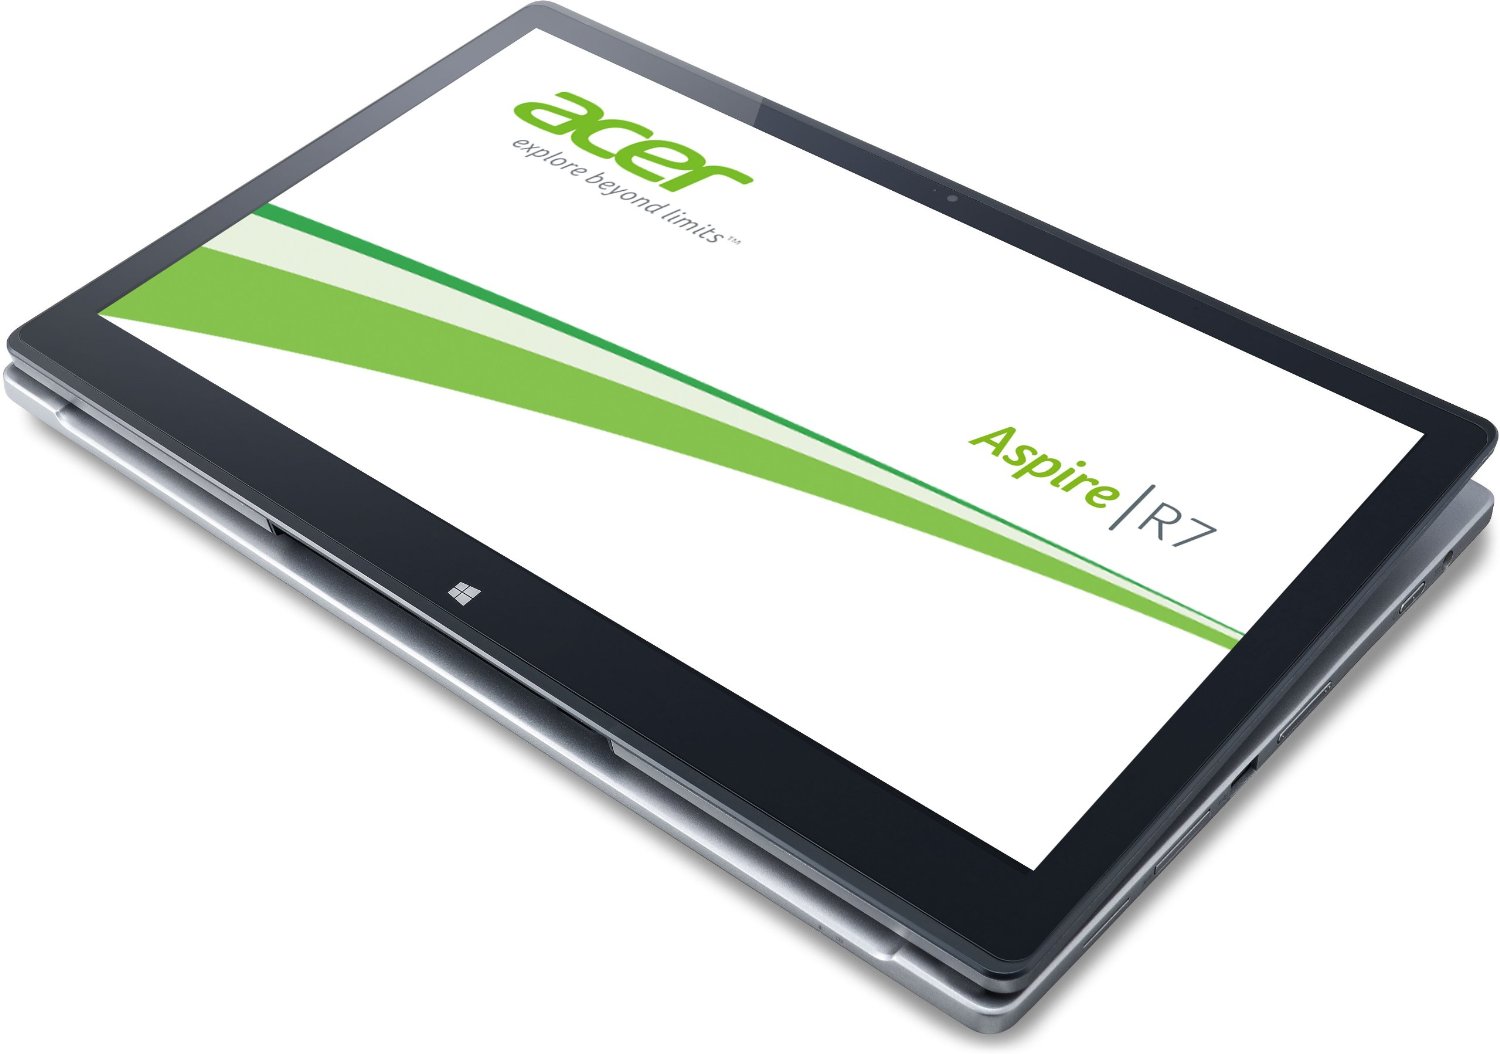 Acer Aspire R7-571G-7353121Tass